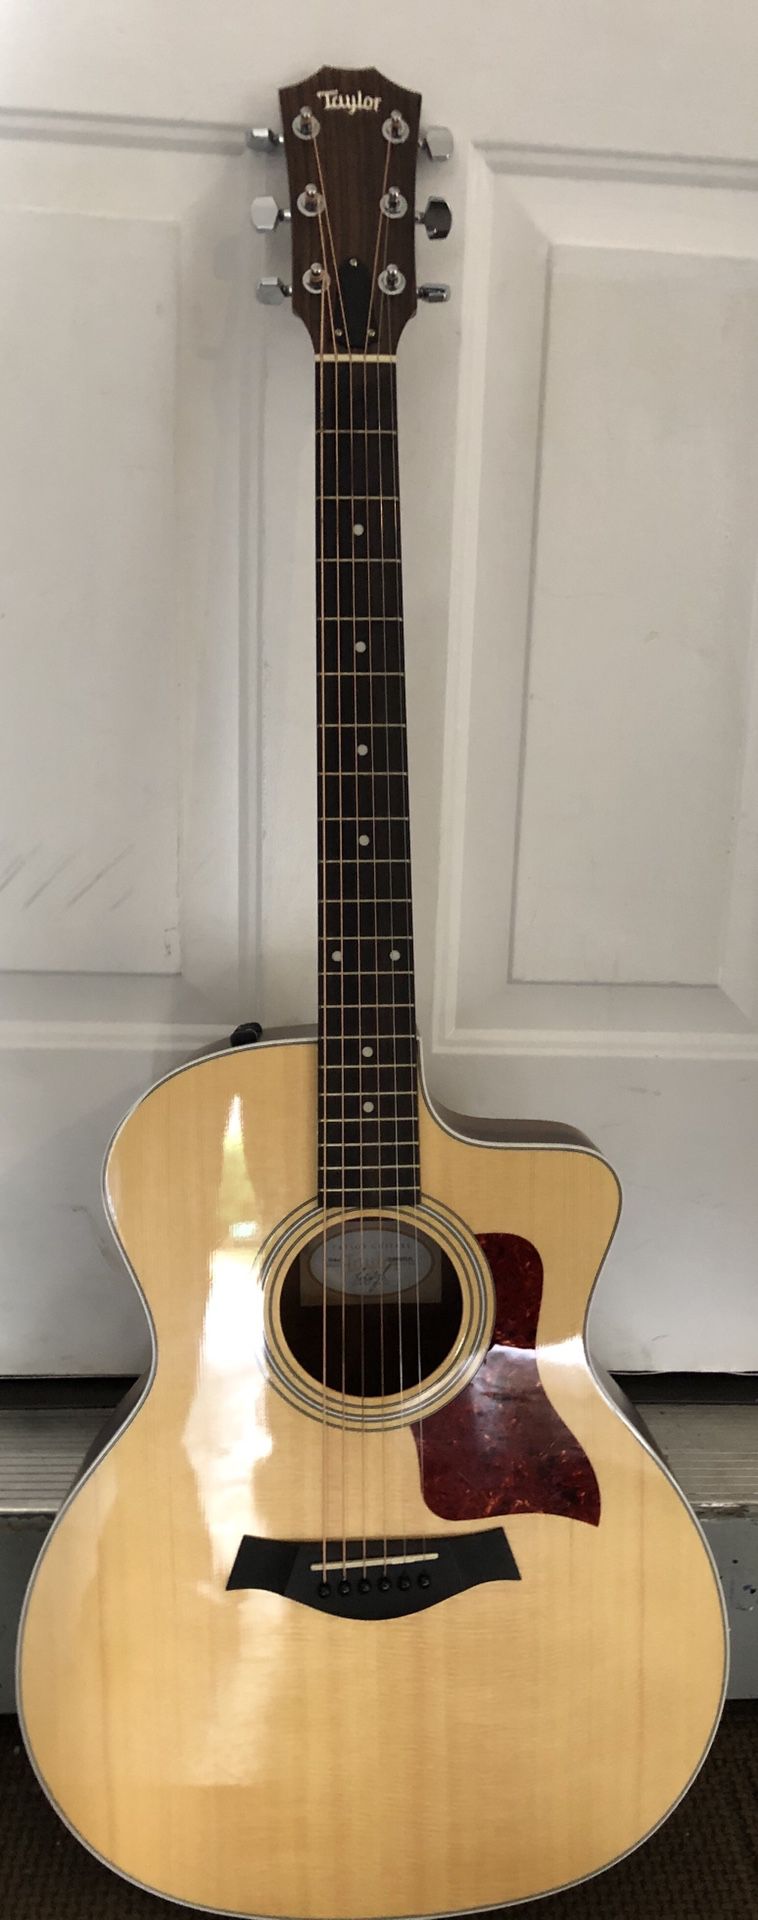 Taylor Electric Acoustic guitar with case. - Scale Length: 25-1/2" - Nut & Saddle: Nubone Nut/Tusq Saddle - Bracing: Forward Shifted Pattern - Pickg